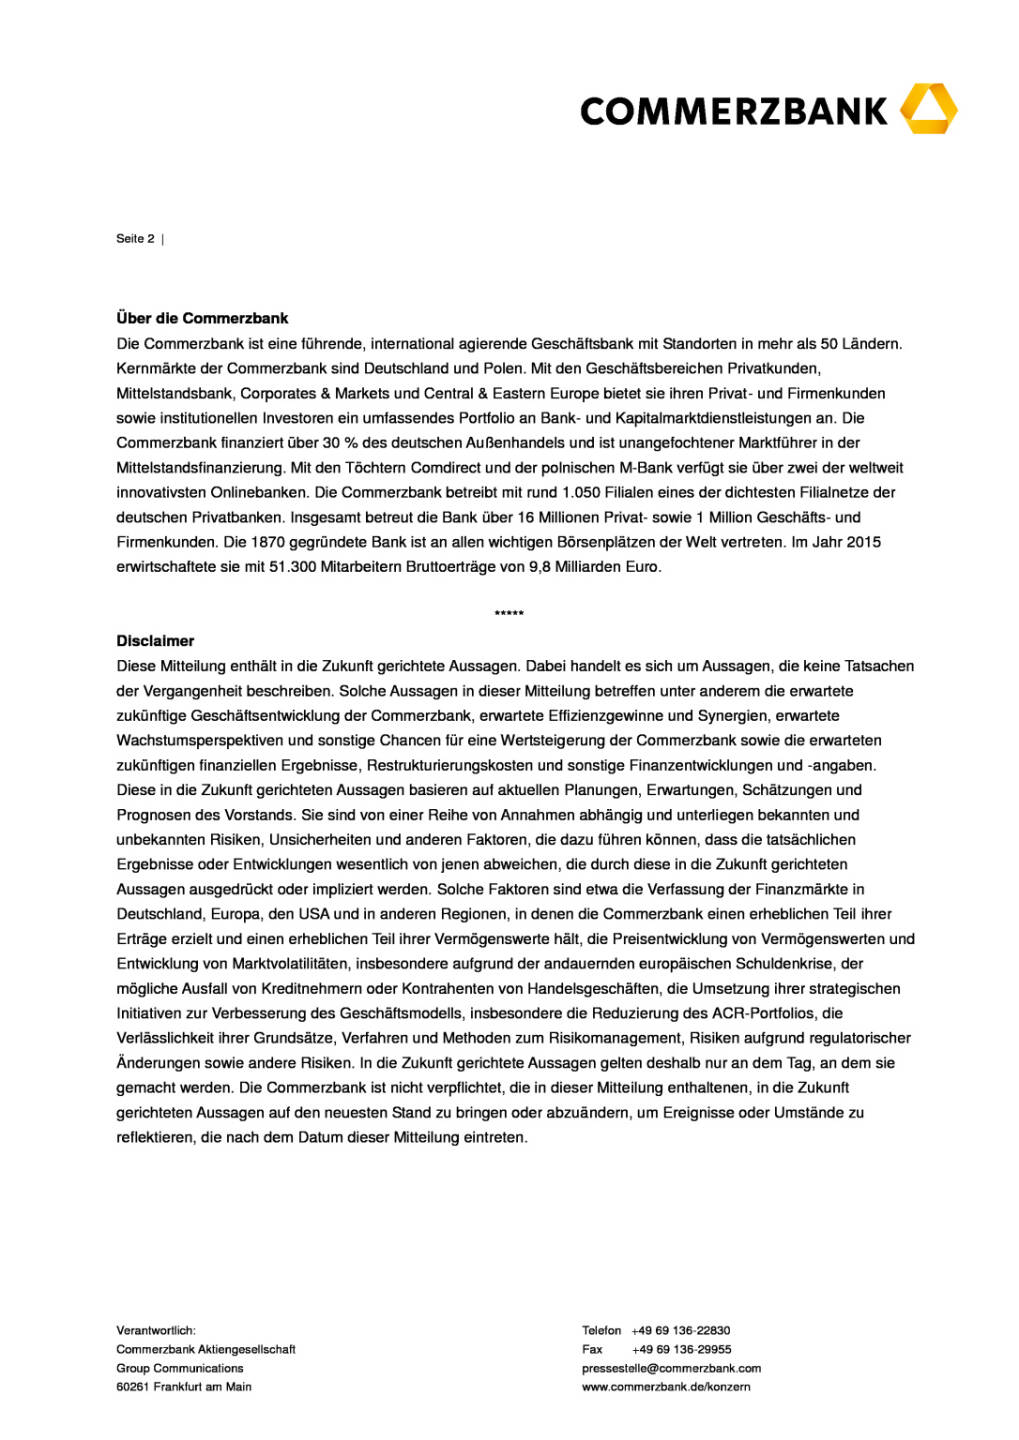 Commerzbank: Aufsichtsrat, Seite 2/2, komplettes Dokument unter http://boerse-social.com/static/uploads/file_1740_commerzbank_aufsichtsrat.pdf